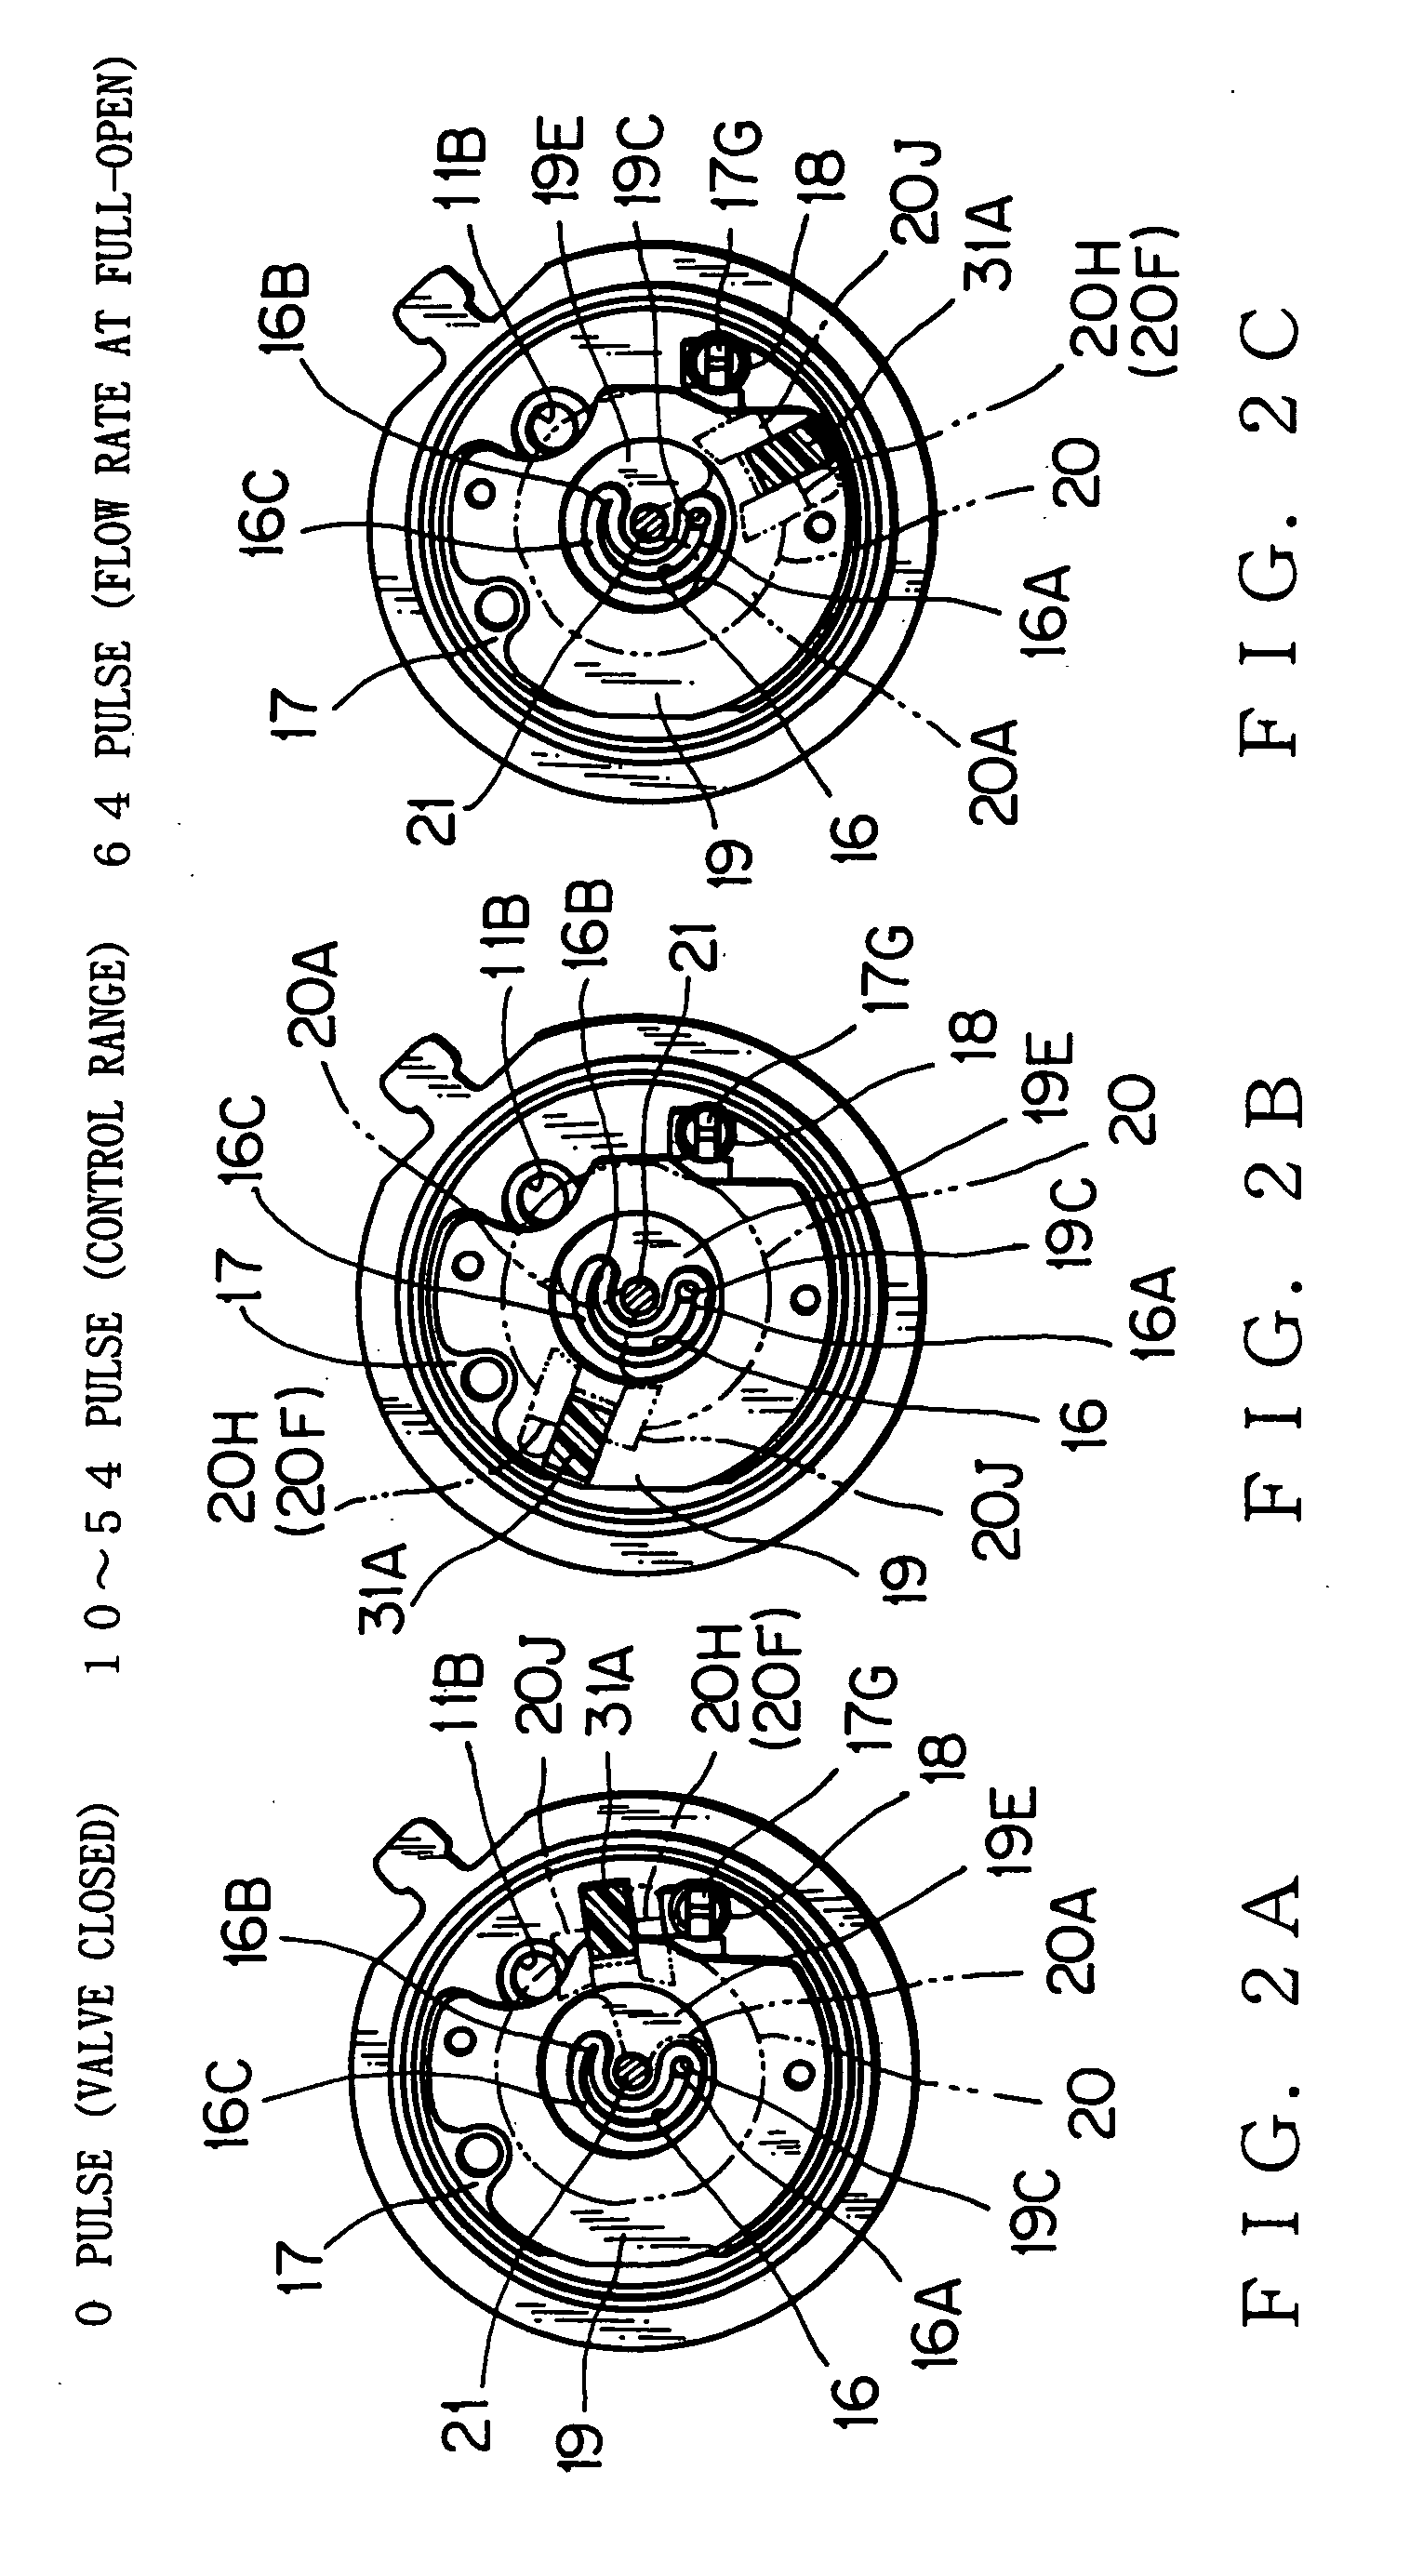 Electric control valve